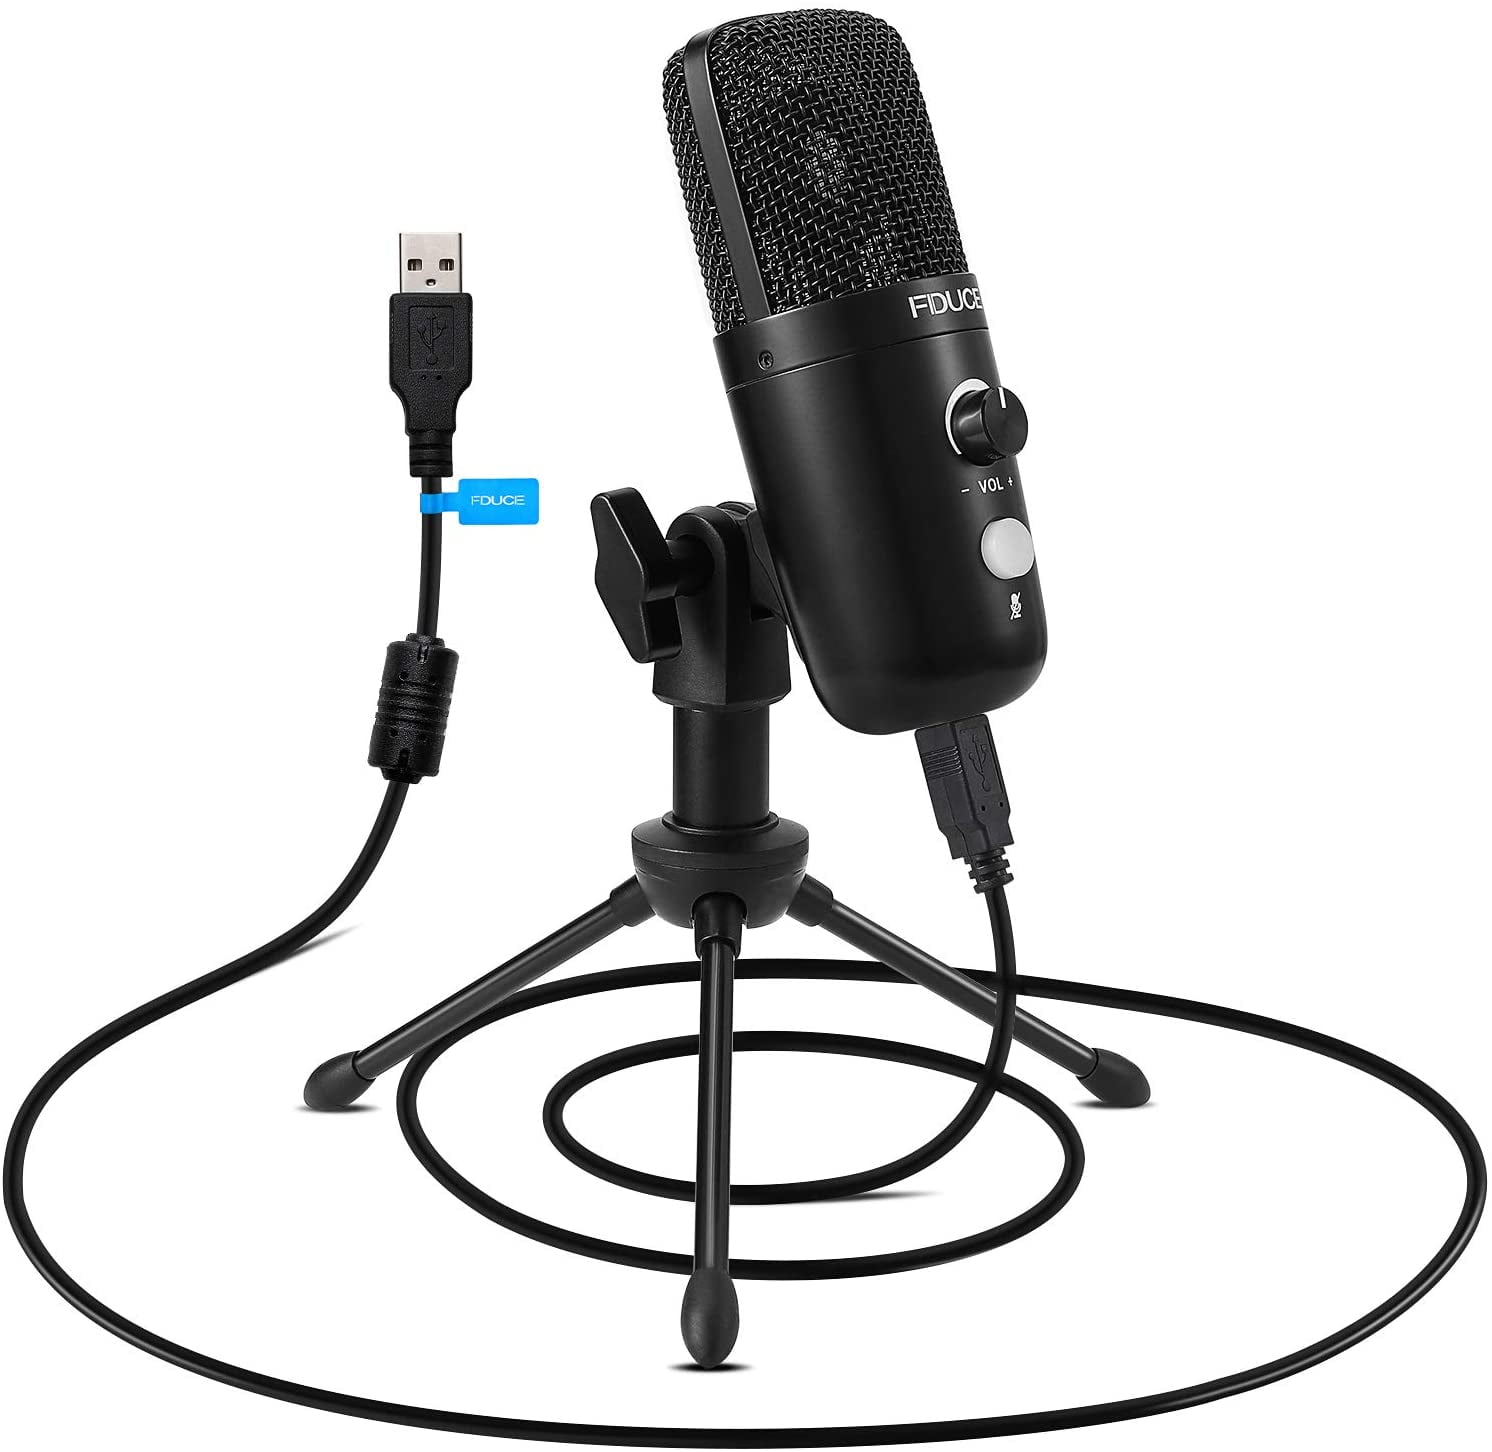 TOOGOO PC-Mikrofon Plug & Play 3,5 Mm Home Studio-Mikrofon mit Kugelcharakteristik Geeignet für Desktop/Laptop/Computer/Notebook/YouTube/Podcasting/Spiel/Chat 